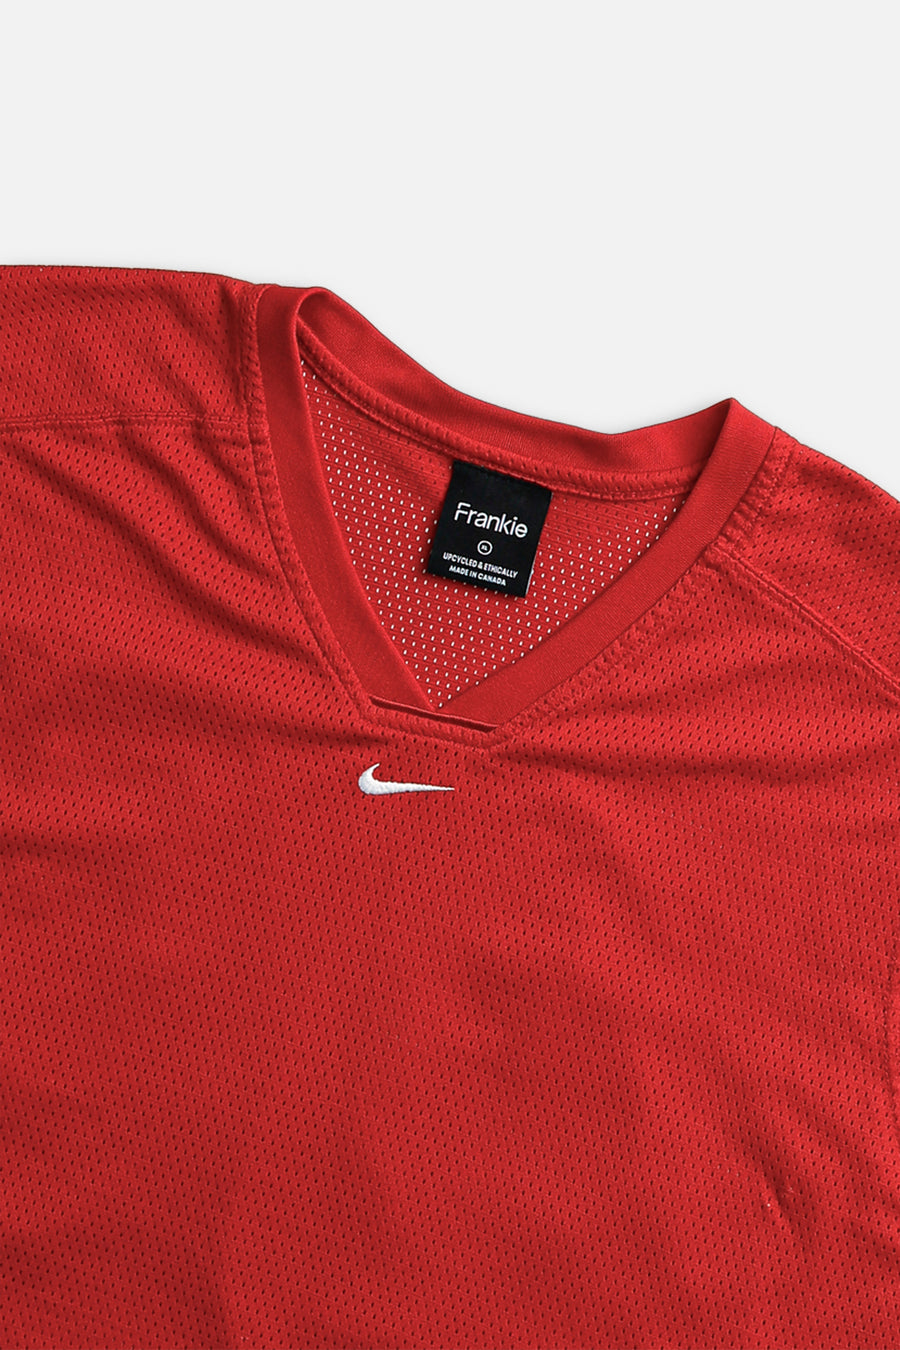 Rework Nike Crop Basketball Jersey - XL